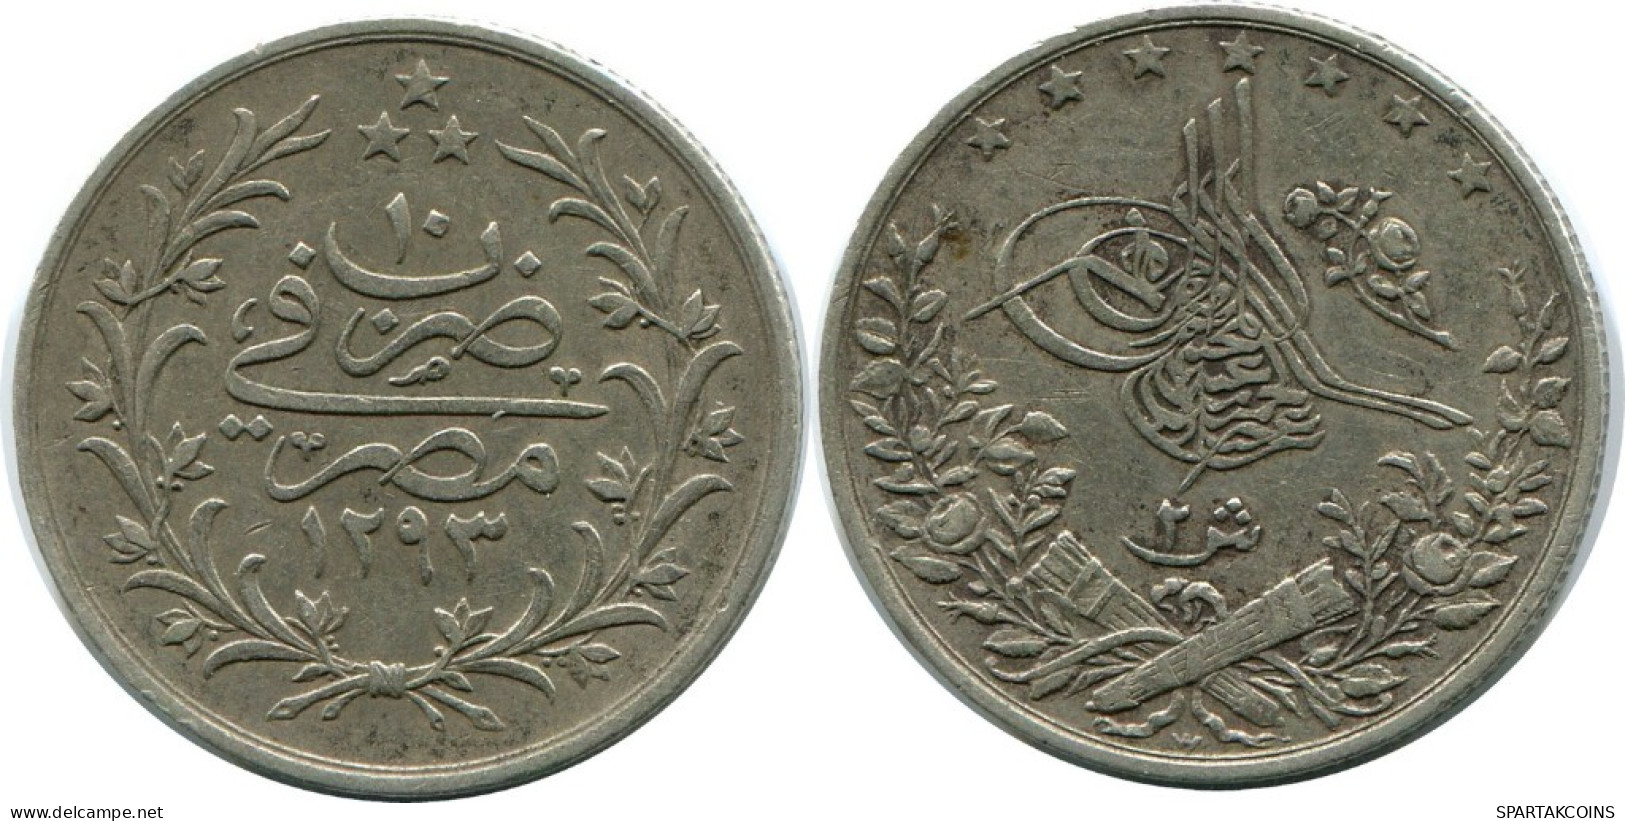 2 QIRSH 1884 EGYPT Islamic Coin #AH261.10.U.A - Egypte